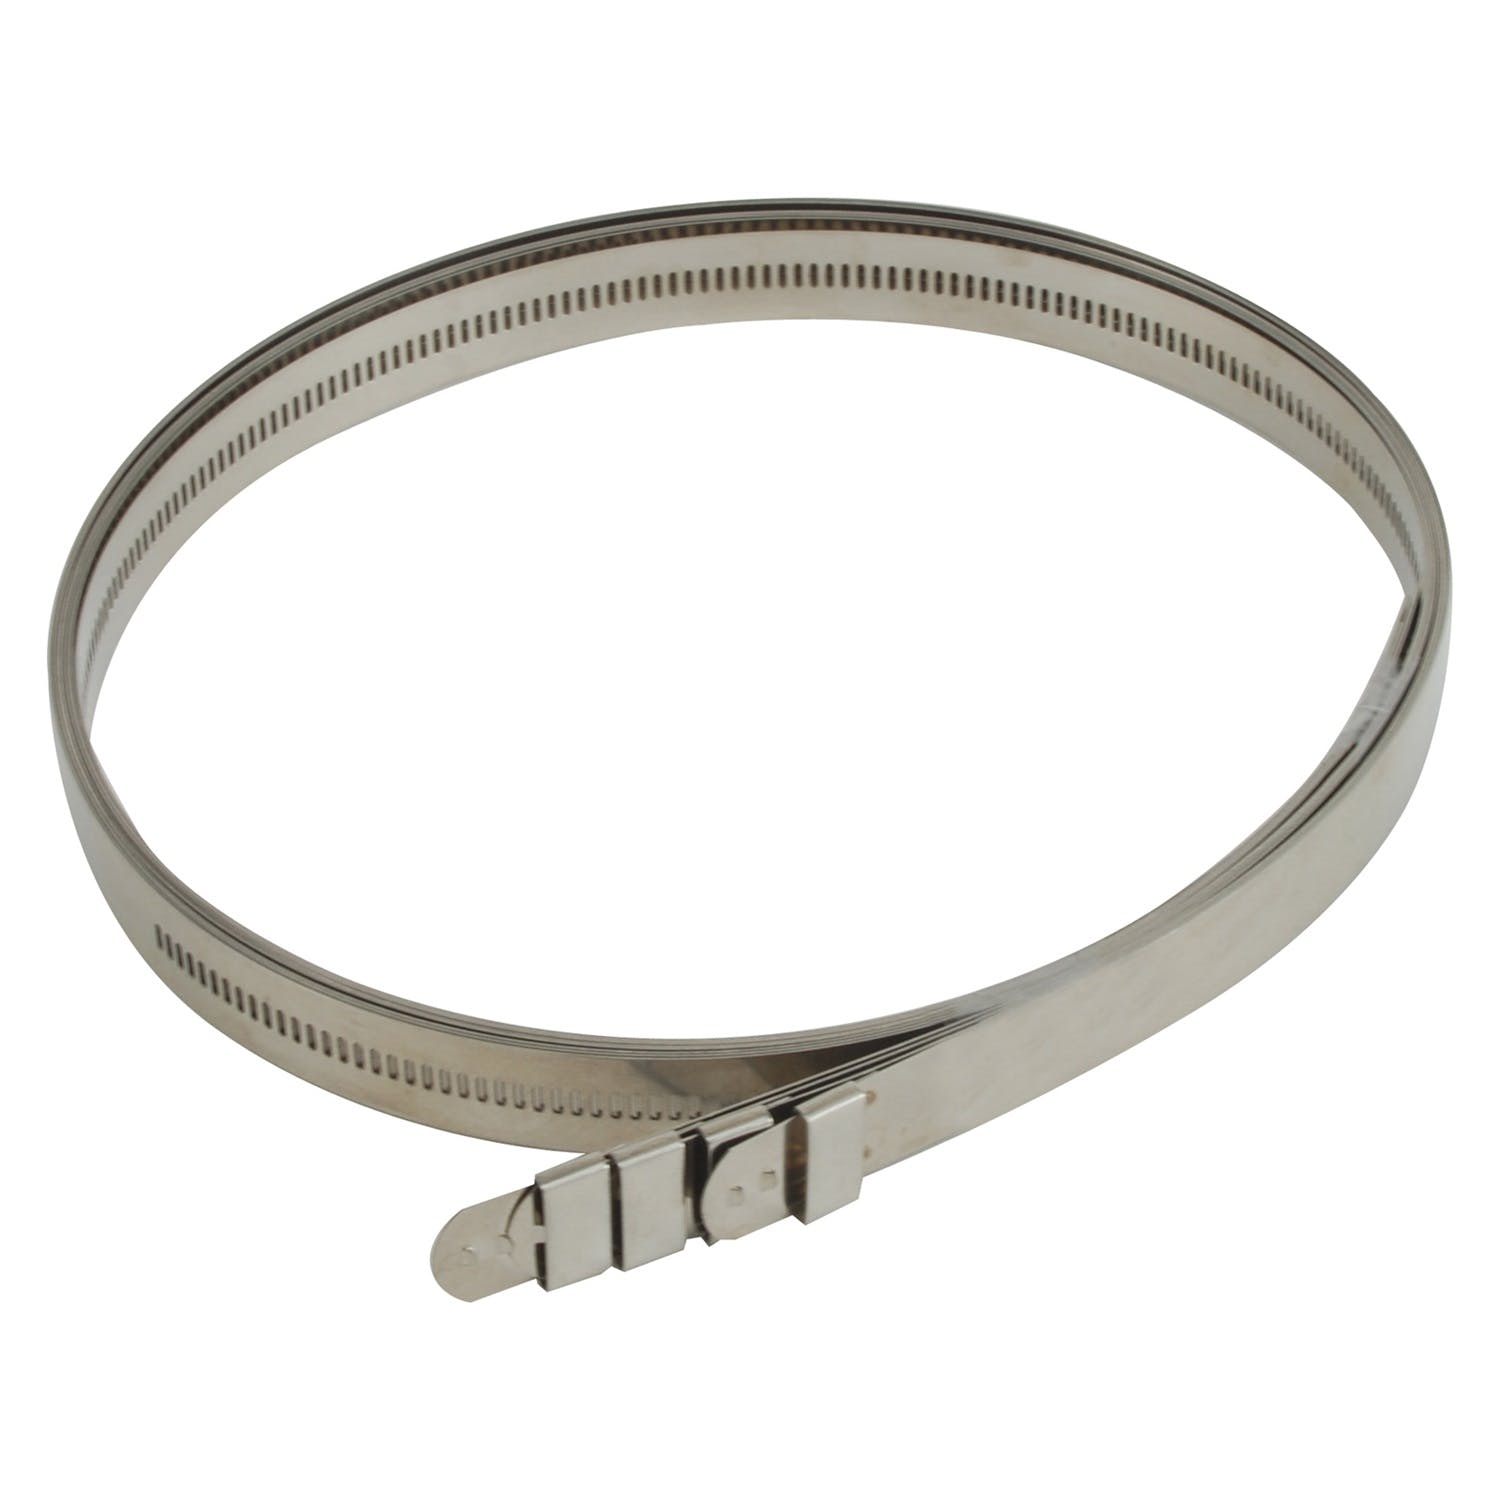 Design Engineering, Inc. 91217 Stainless Steel Positive Locking Ties - 1/2 (12mm) x 40